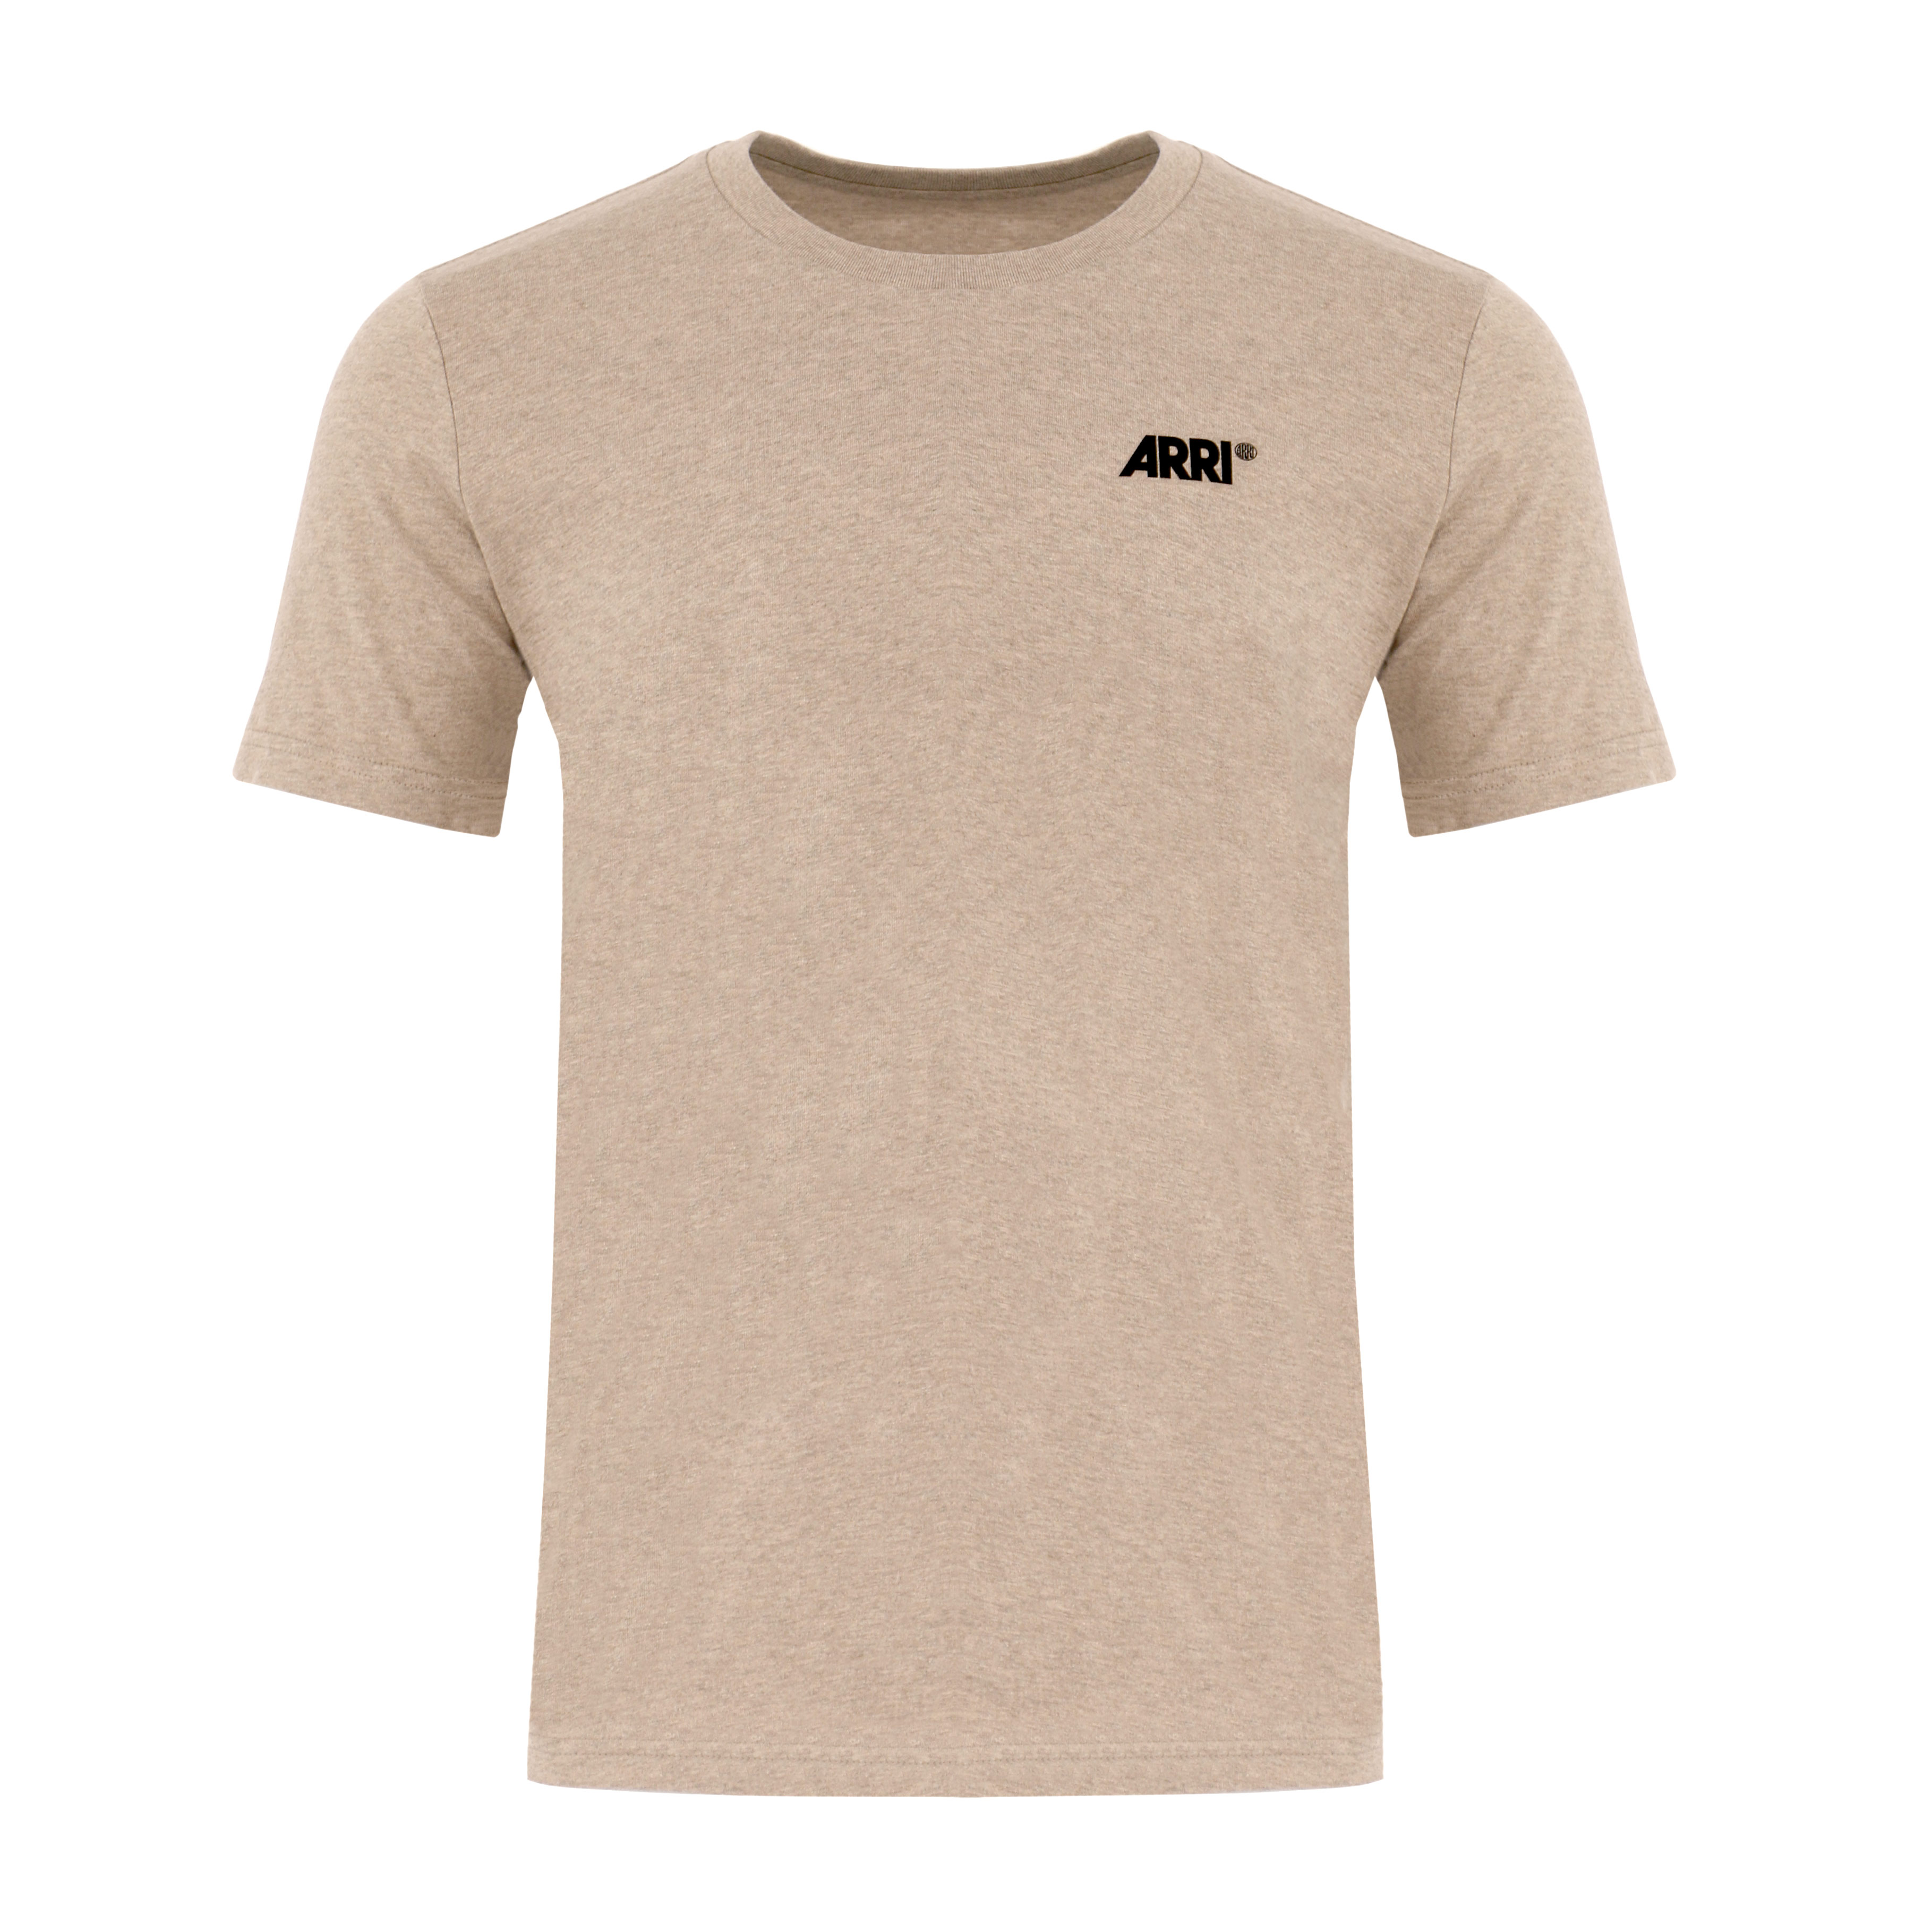 ARRI Unisex T-Shirt in heather sand